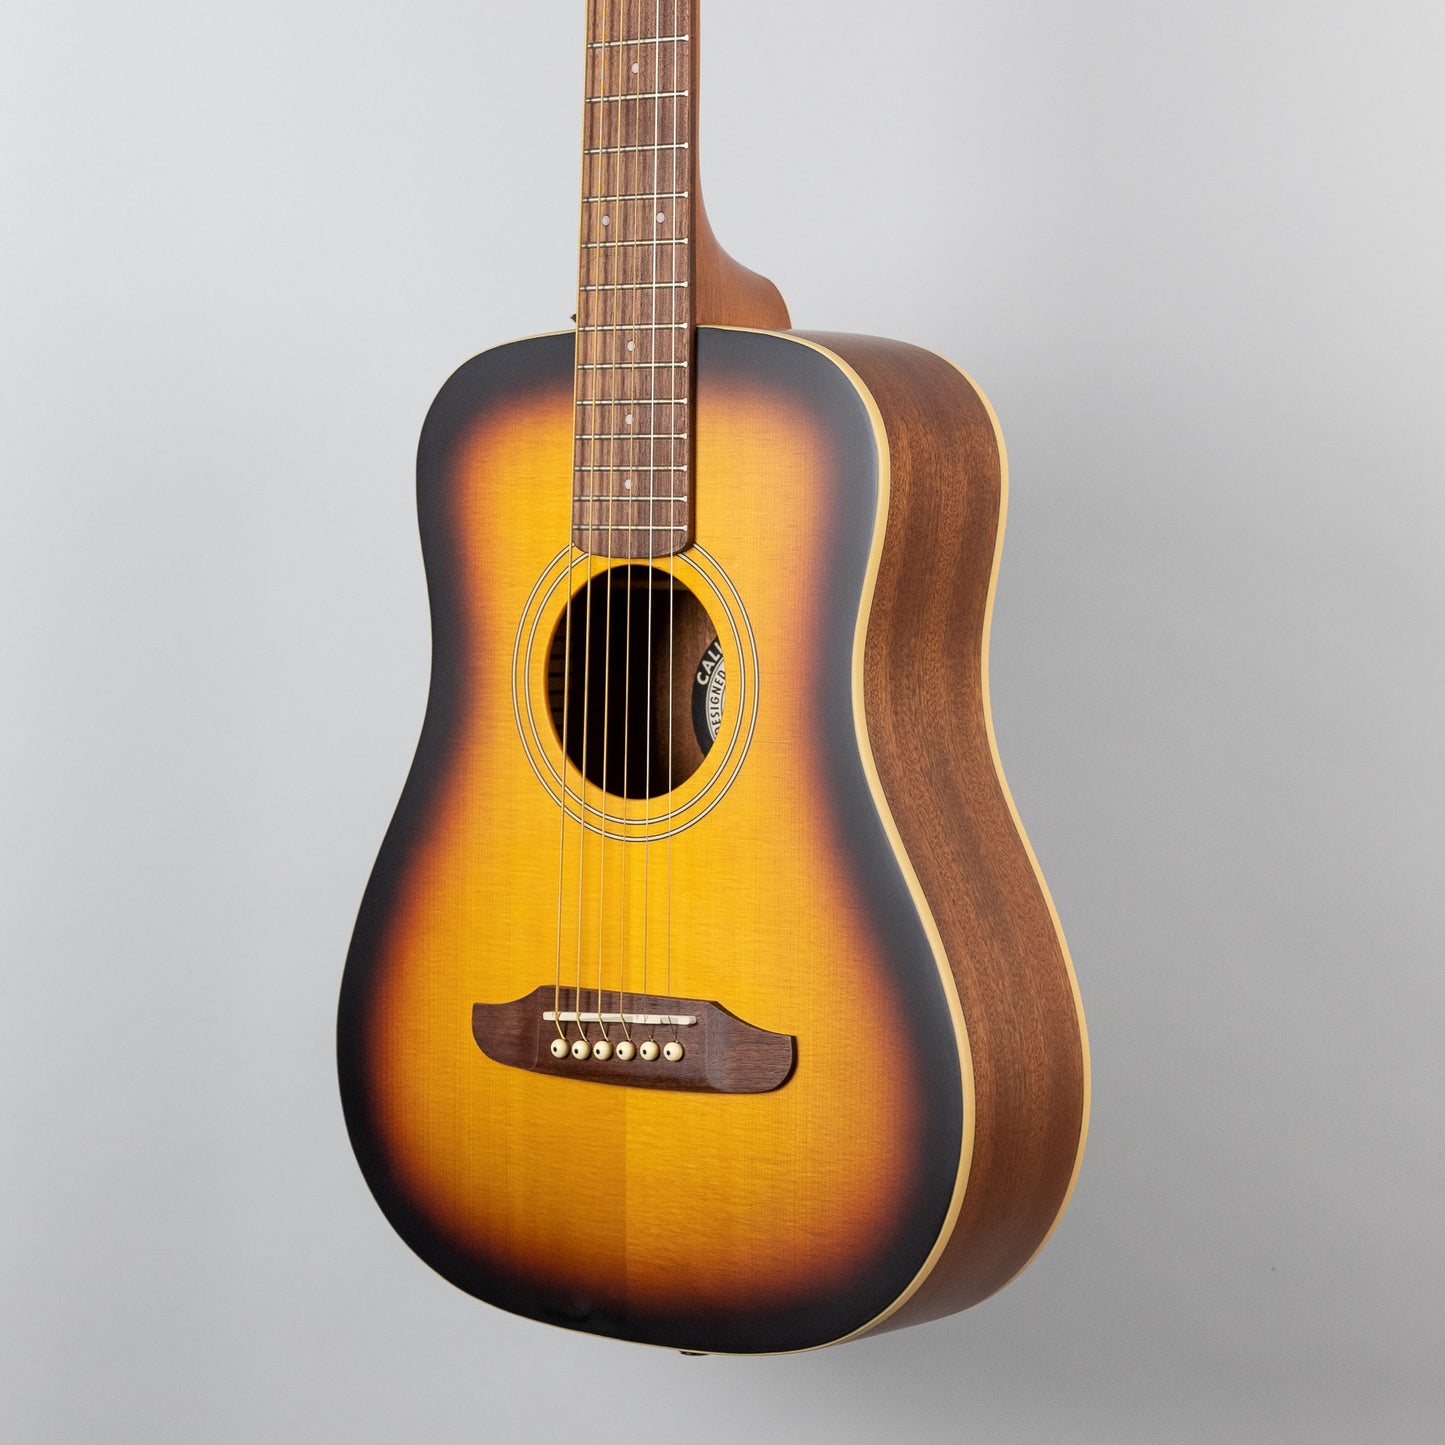 Fender Redondo Mini Acoustic Guitar in Sunburst